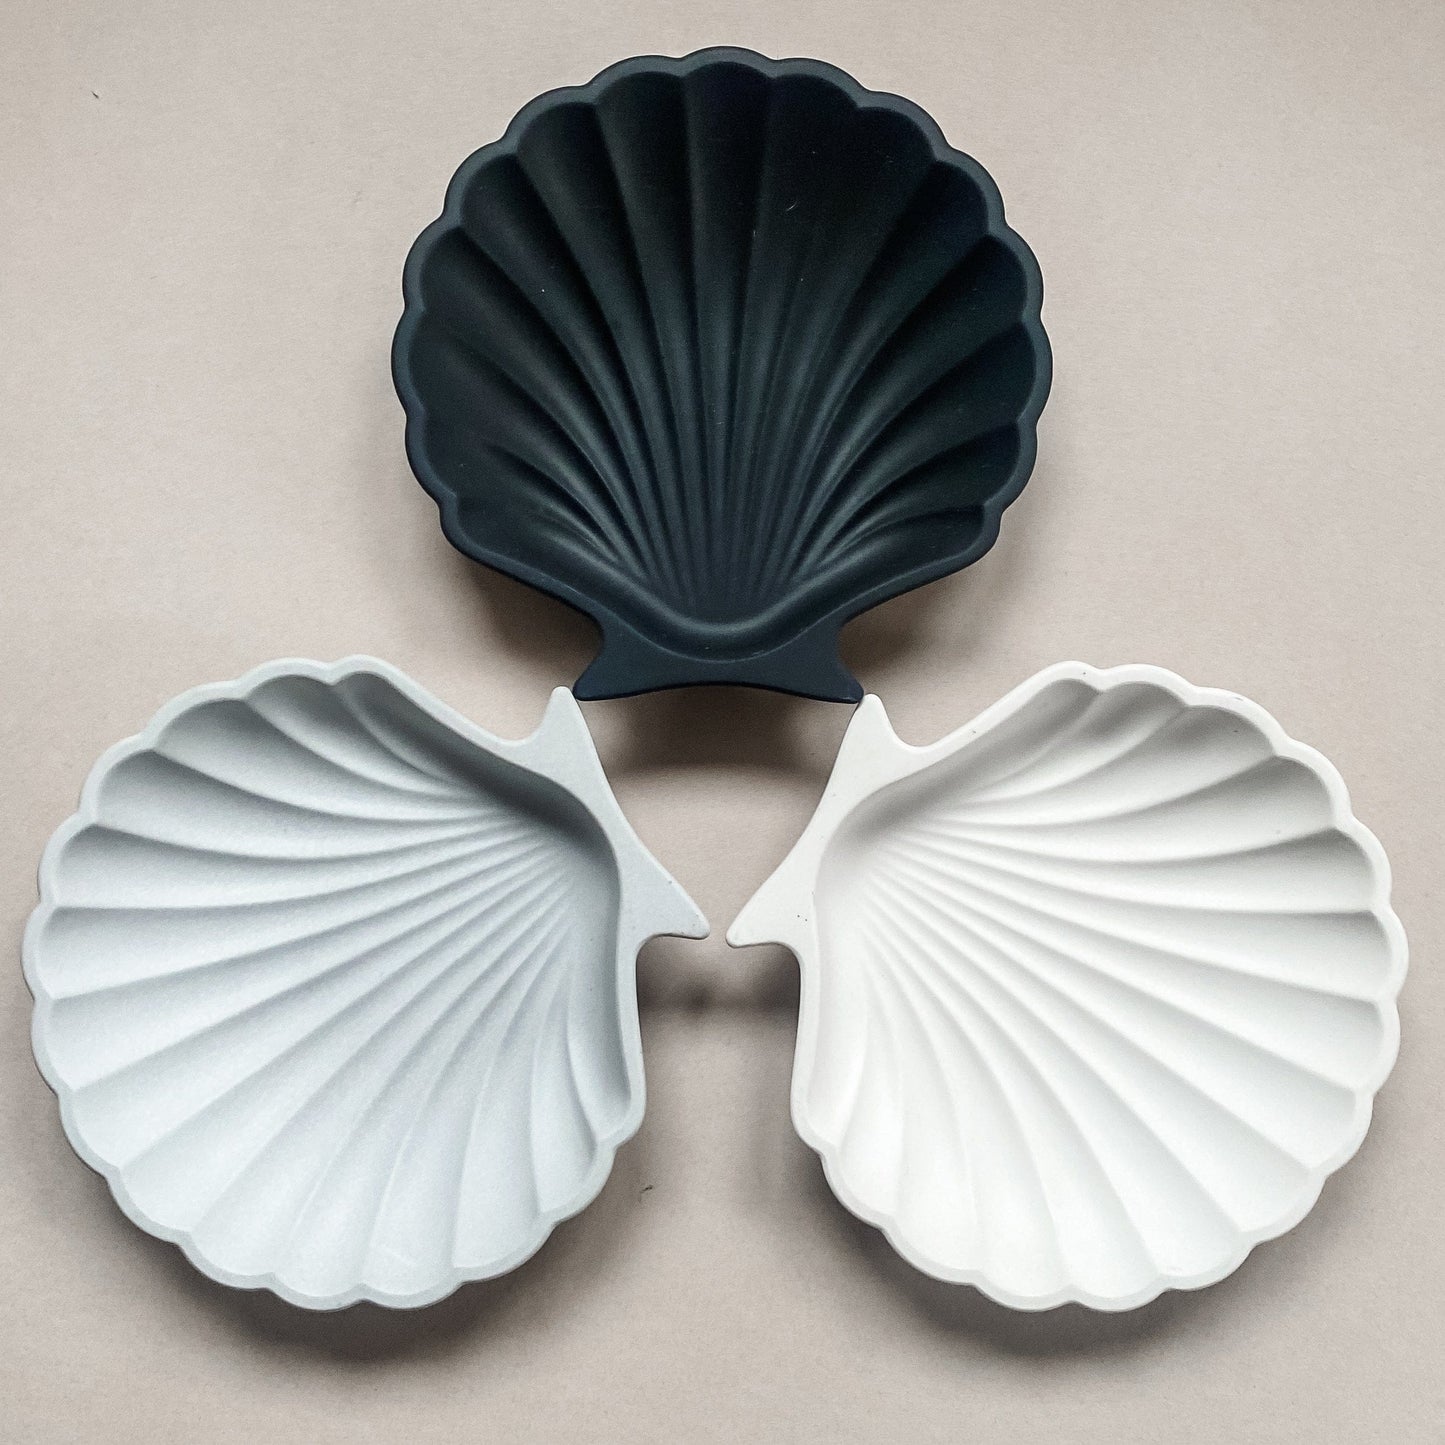 Scallop Shell - Monochrome Collection